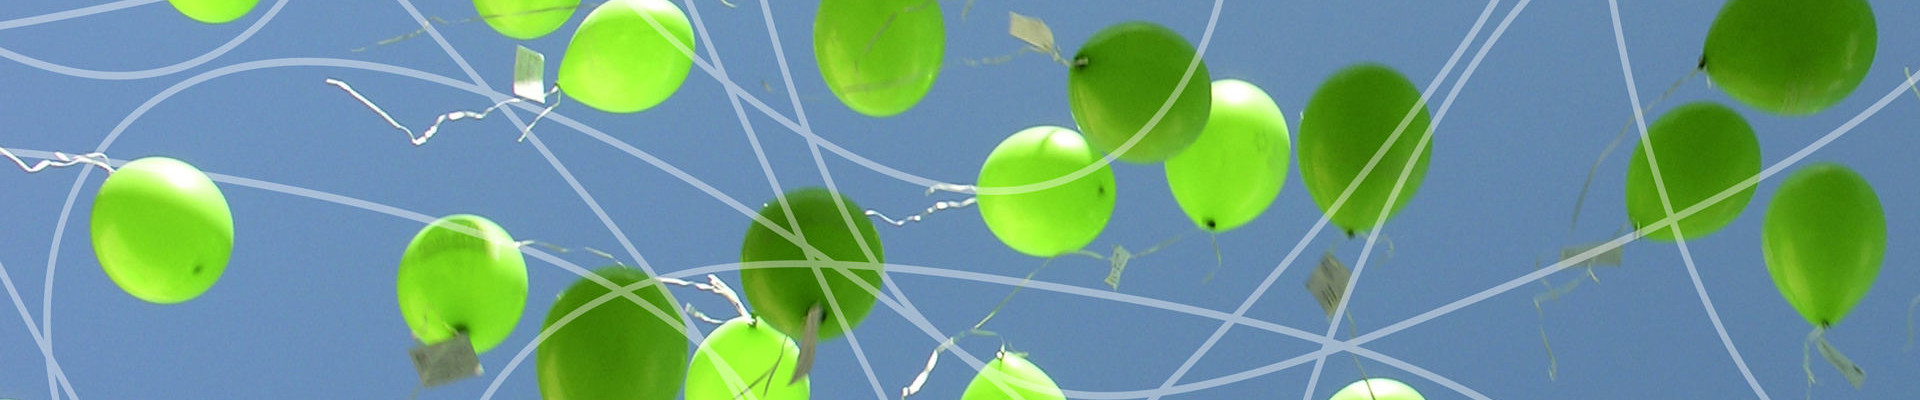 YPWD Header Branding - Balloons